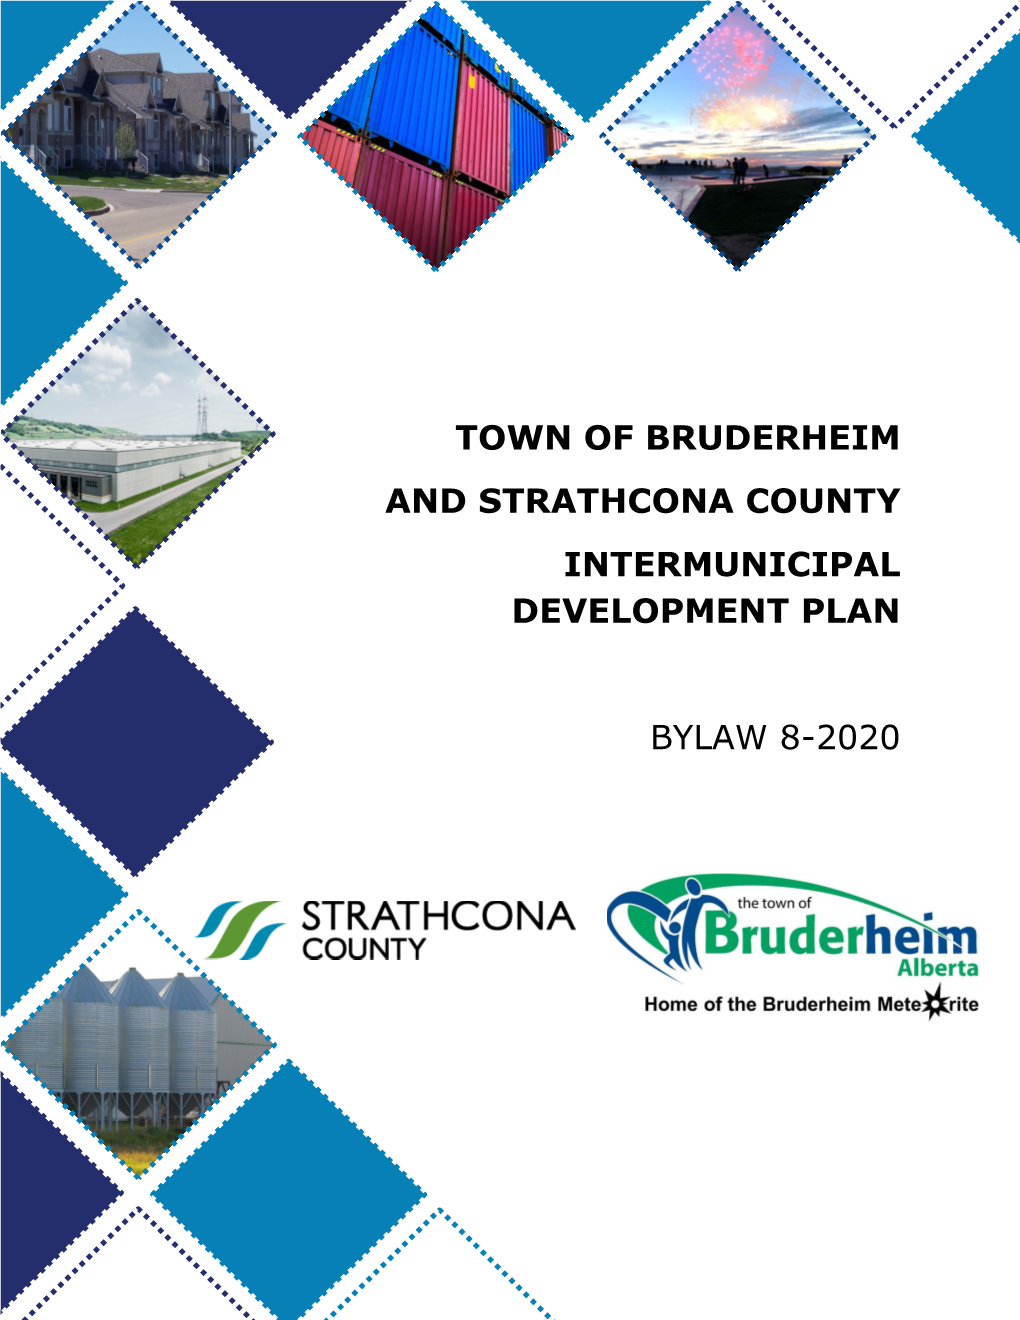 Town of Bruderheim and Strathcona County Intermunicipal Development Plan